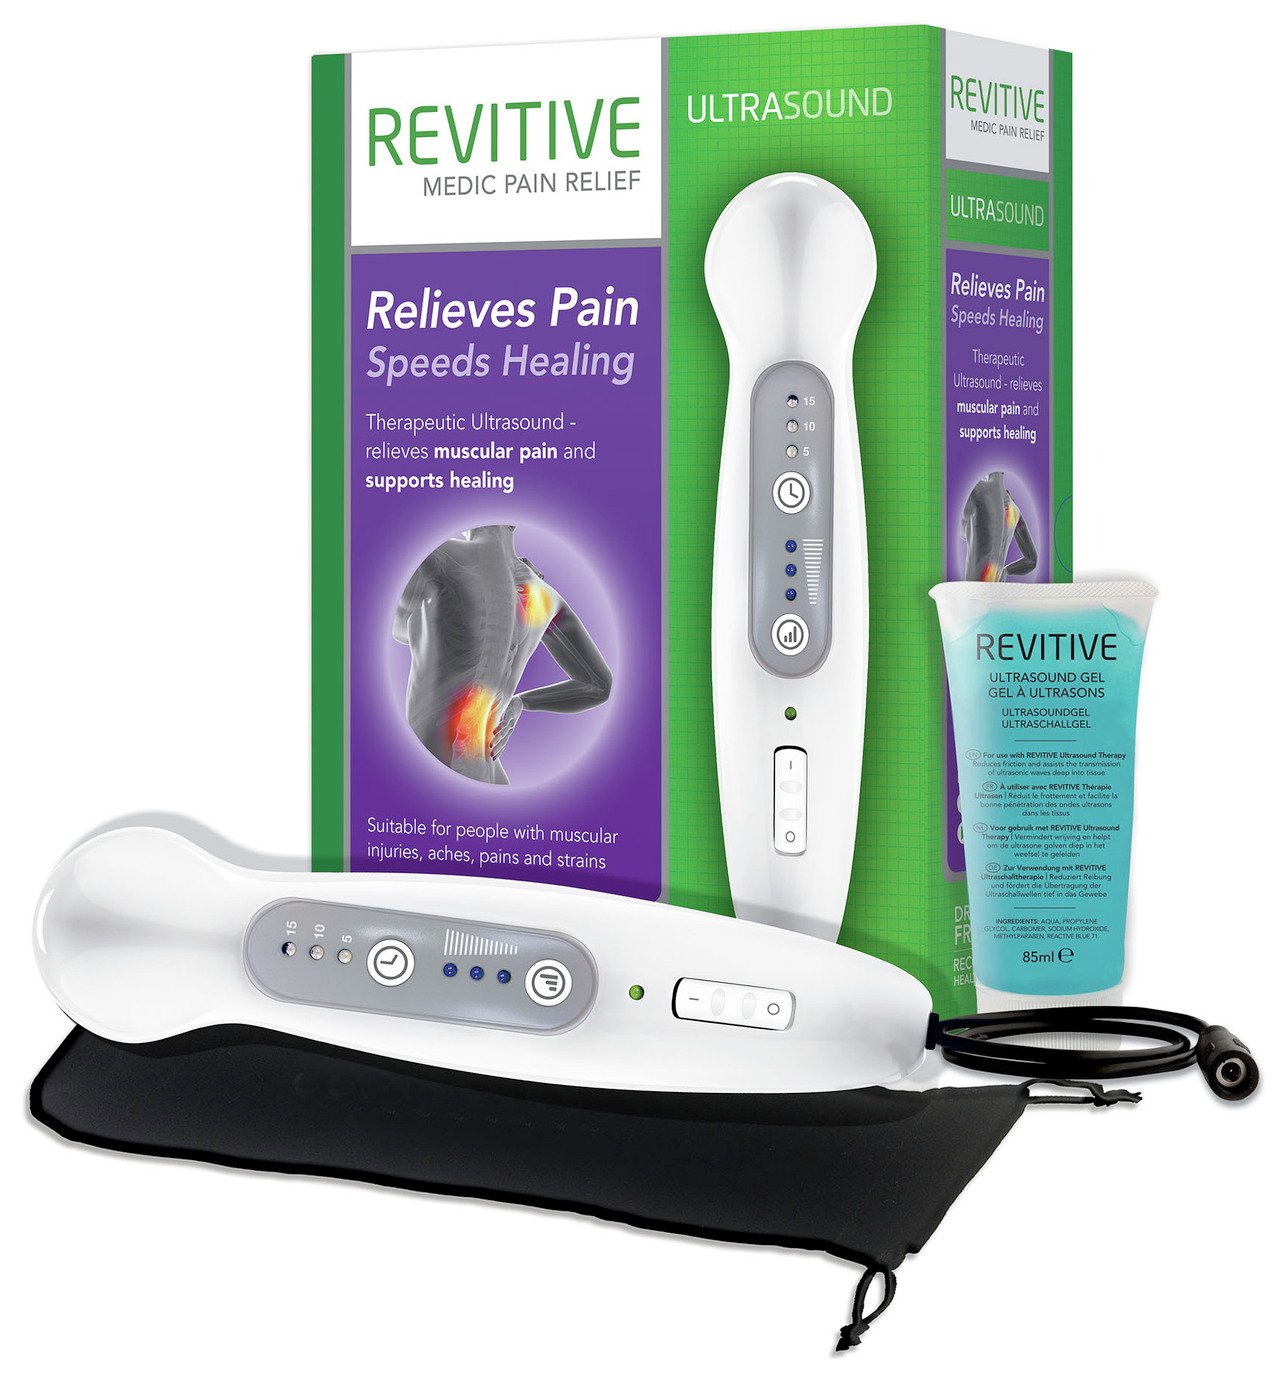 Revitive Ultrasound Device Review